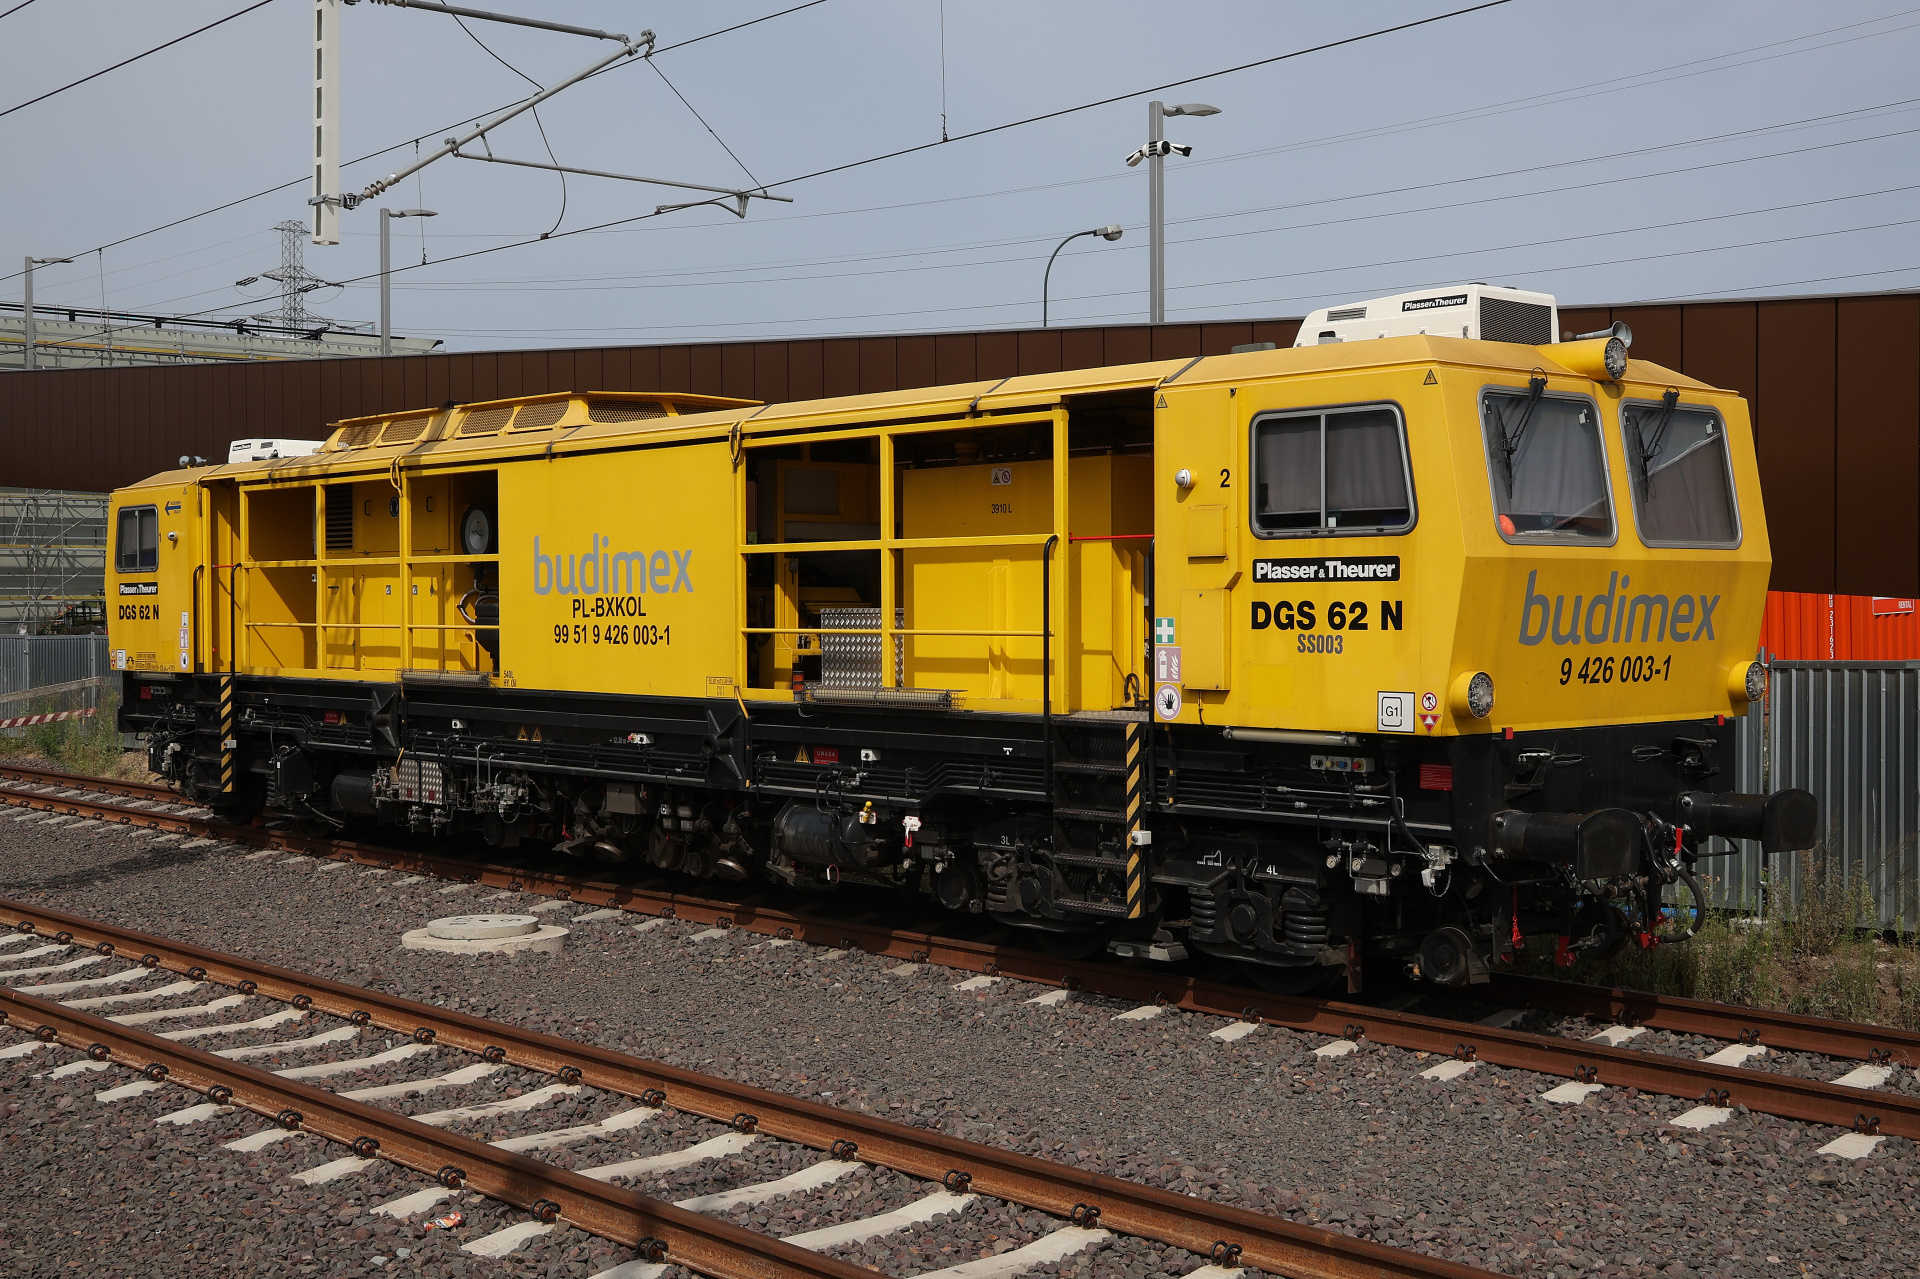 Plasser & Theurer DGS 62 N SS003 (Vehicles » Trains and Locomotives » Maintenance)